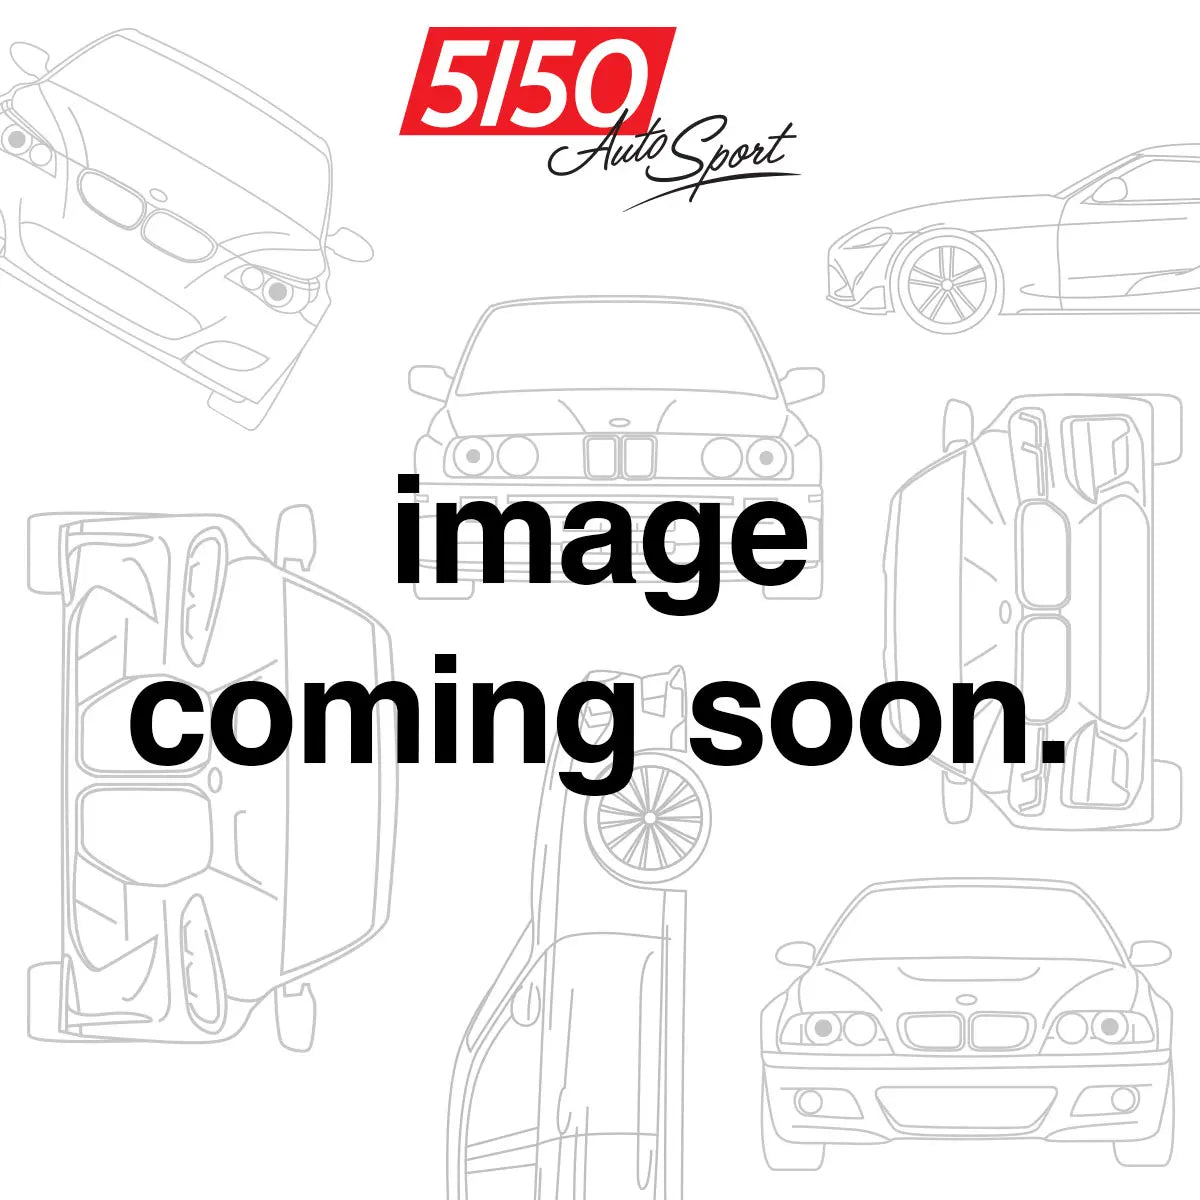 5150 AutoSport Pro-Xtreme Cylinder Head Service, BMW S58